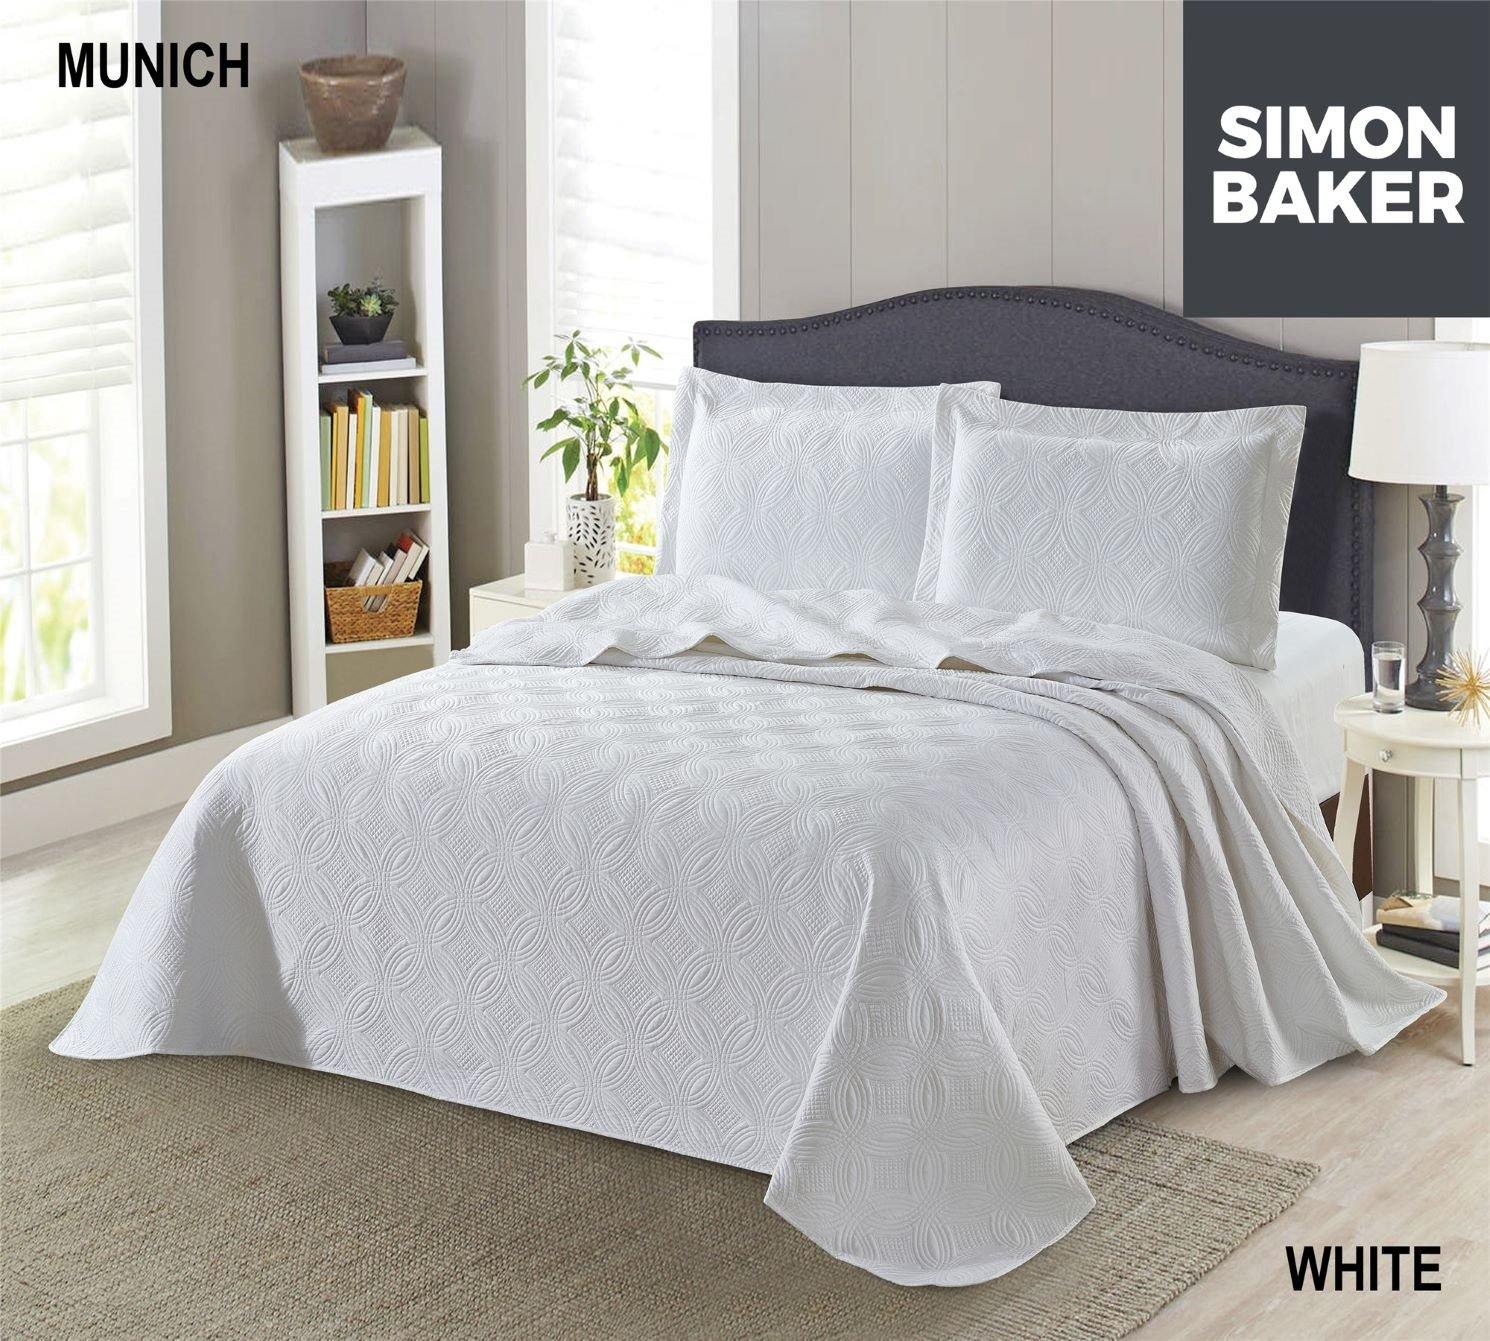 Simon Baker | Munich Bedspread White (Various Sizes)